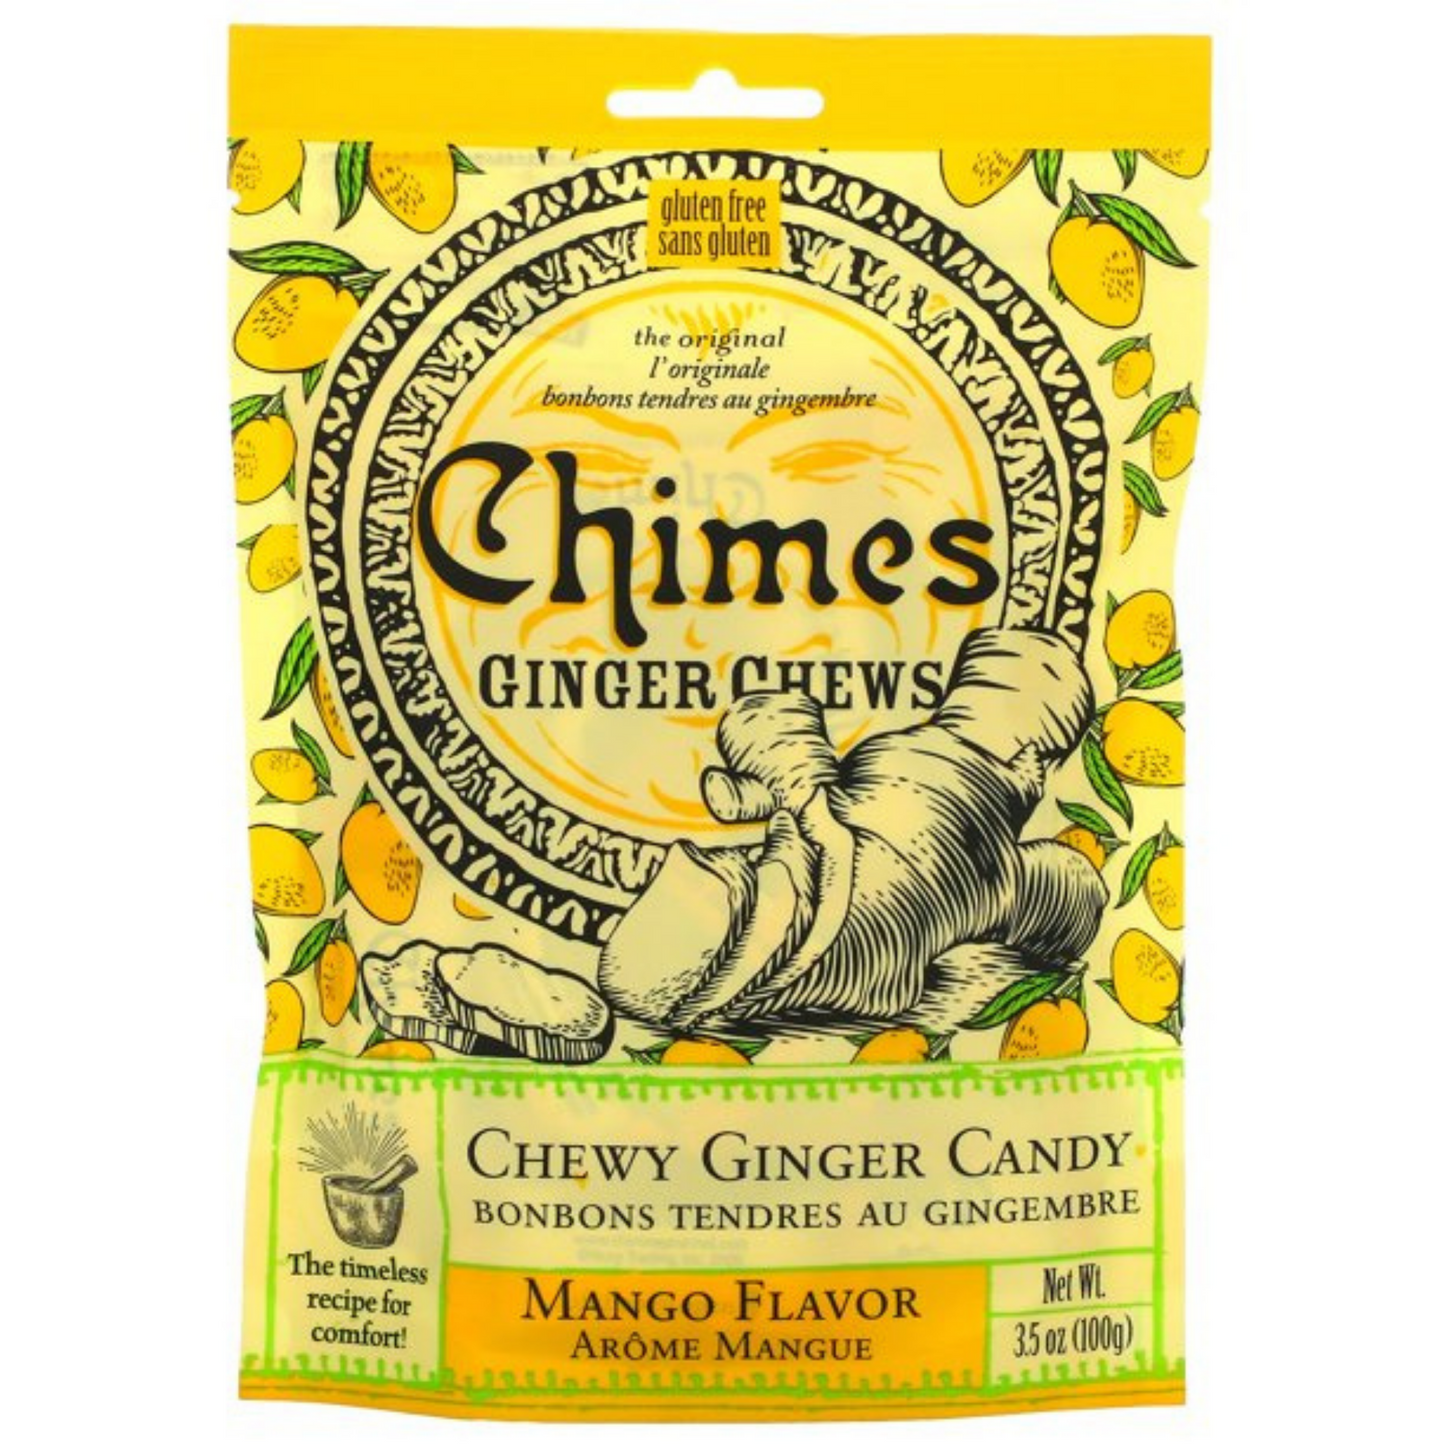 Primary Image of Mango Ginger Chews